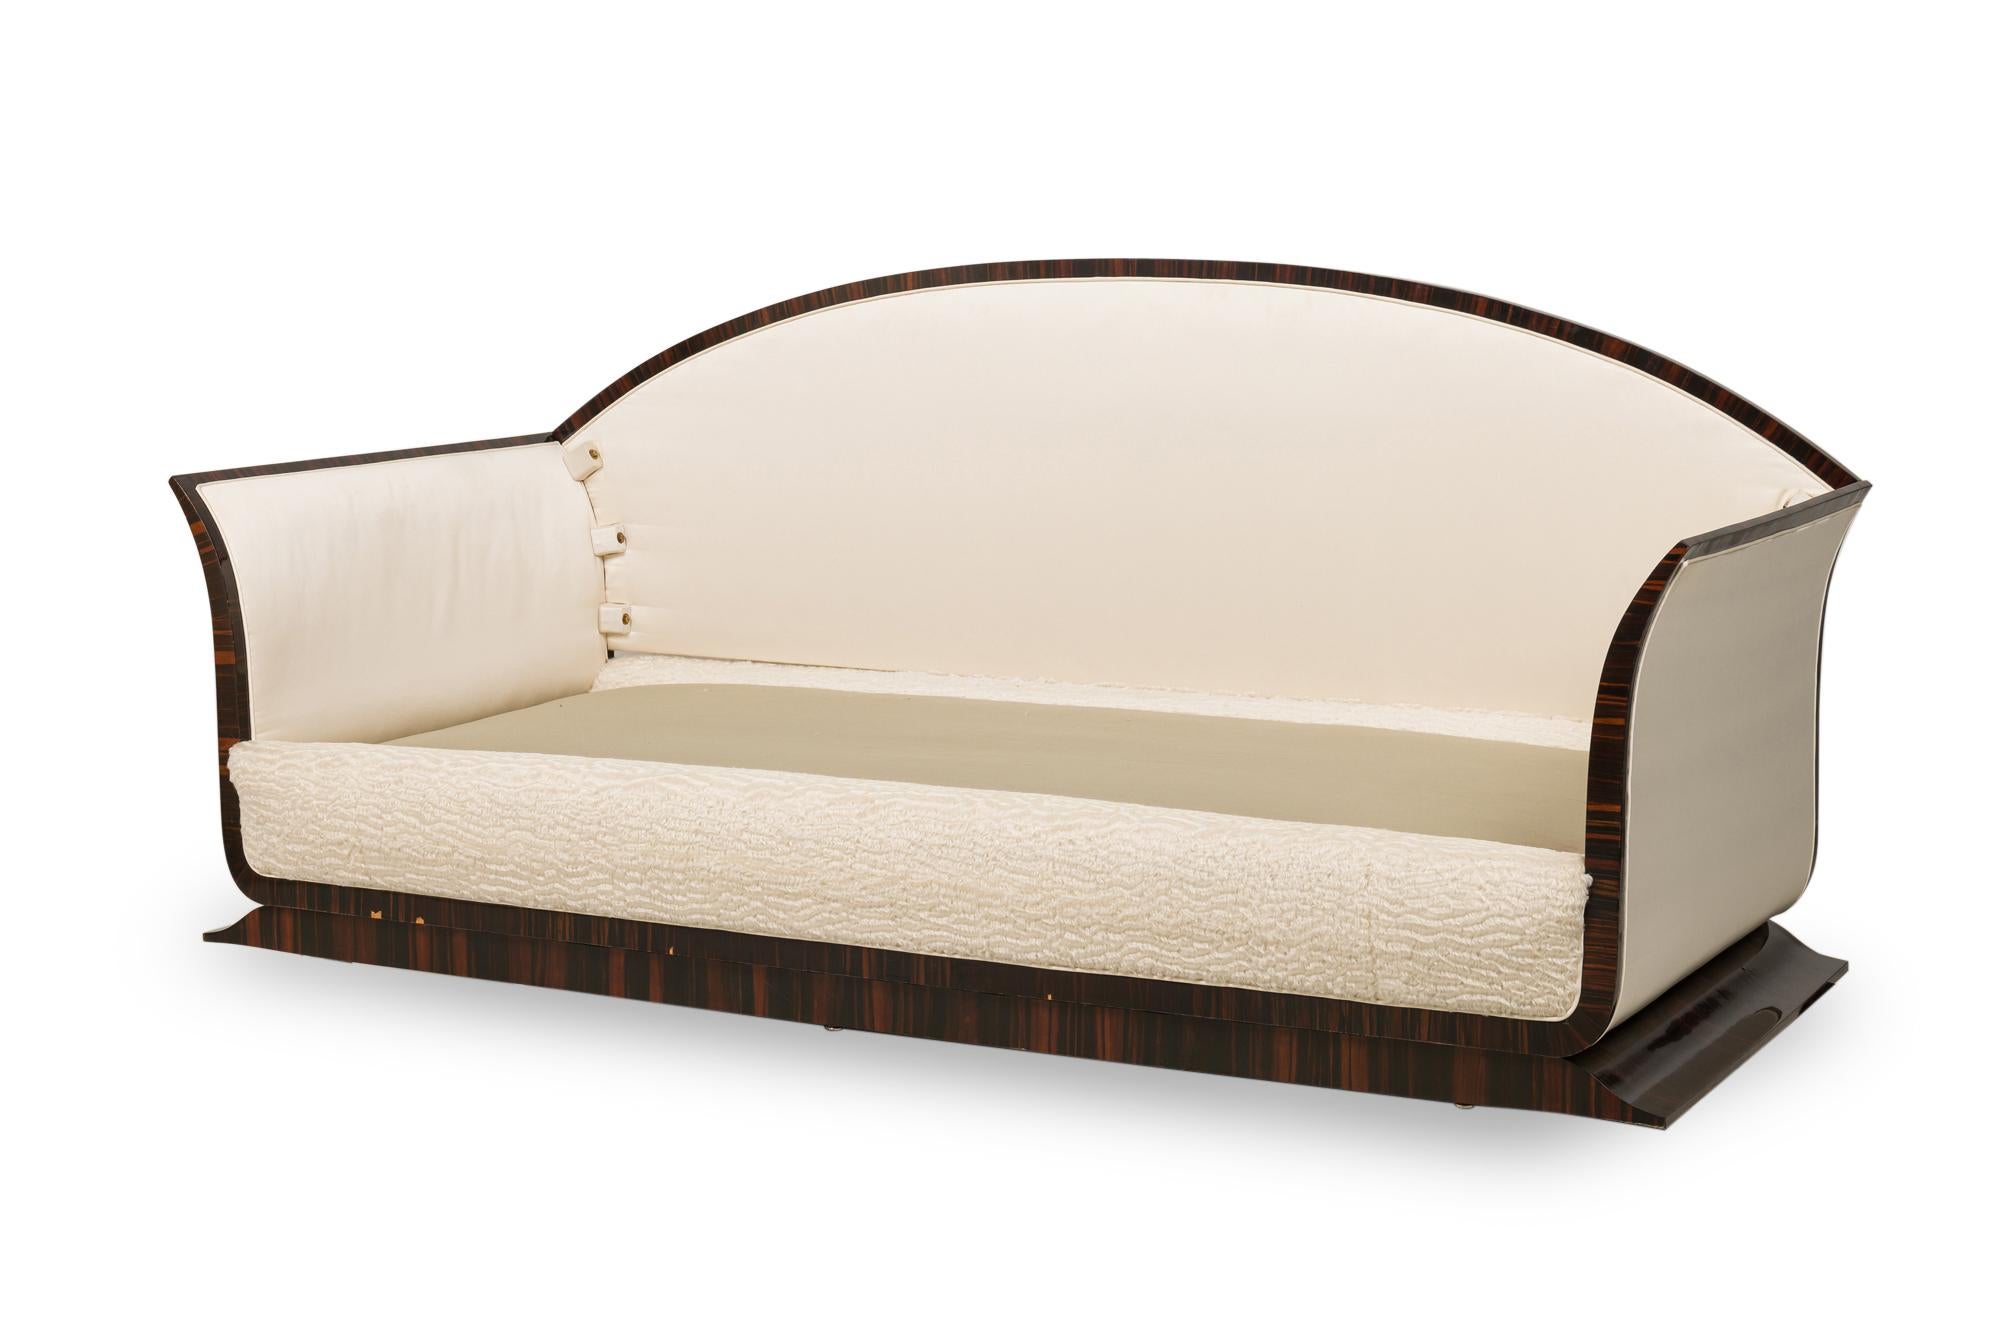 Albert Fournier Art Deco Macassar Veneer and Beige Mohair Upholstered Daybed For Sale 3